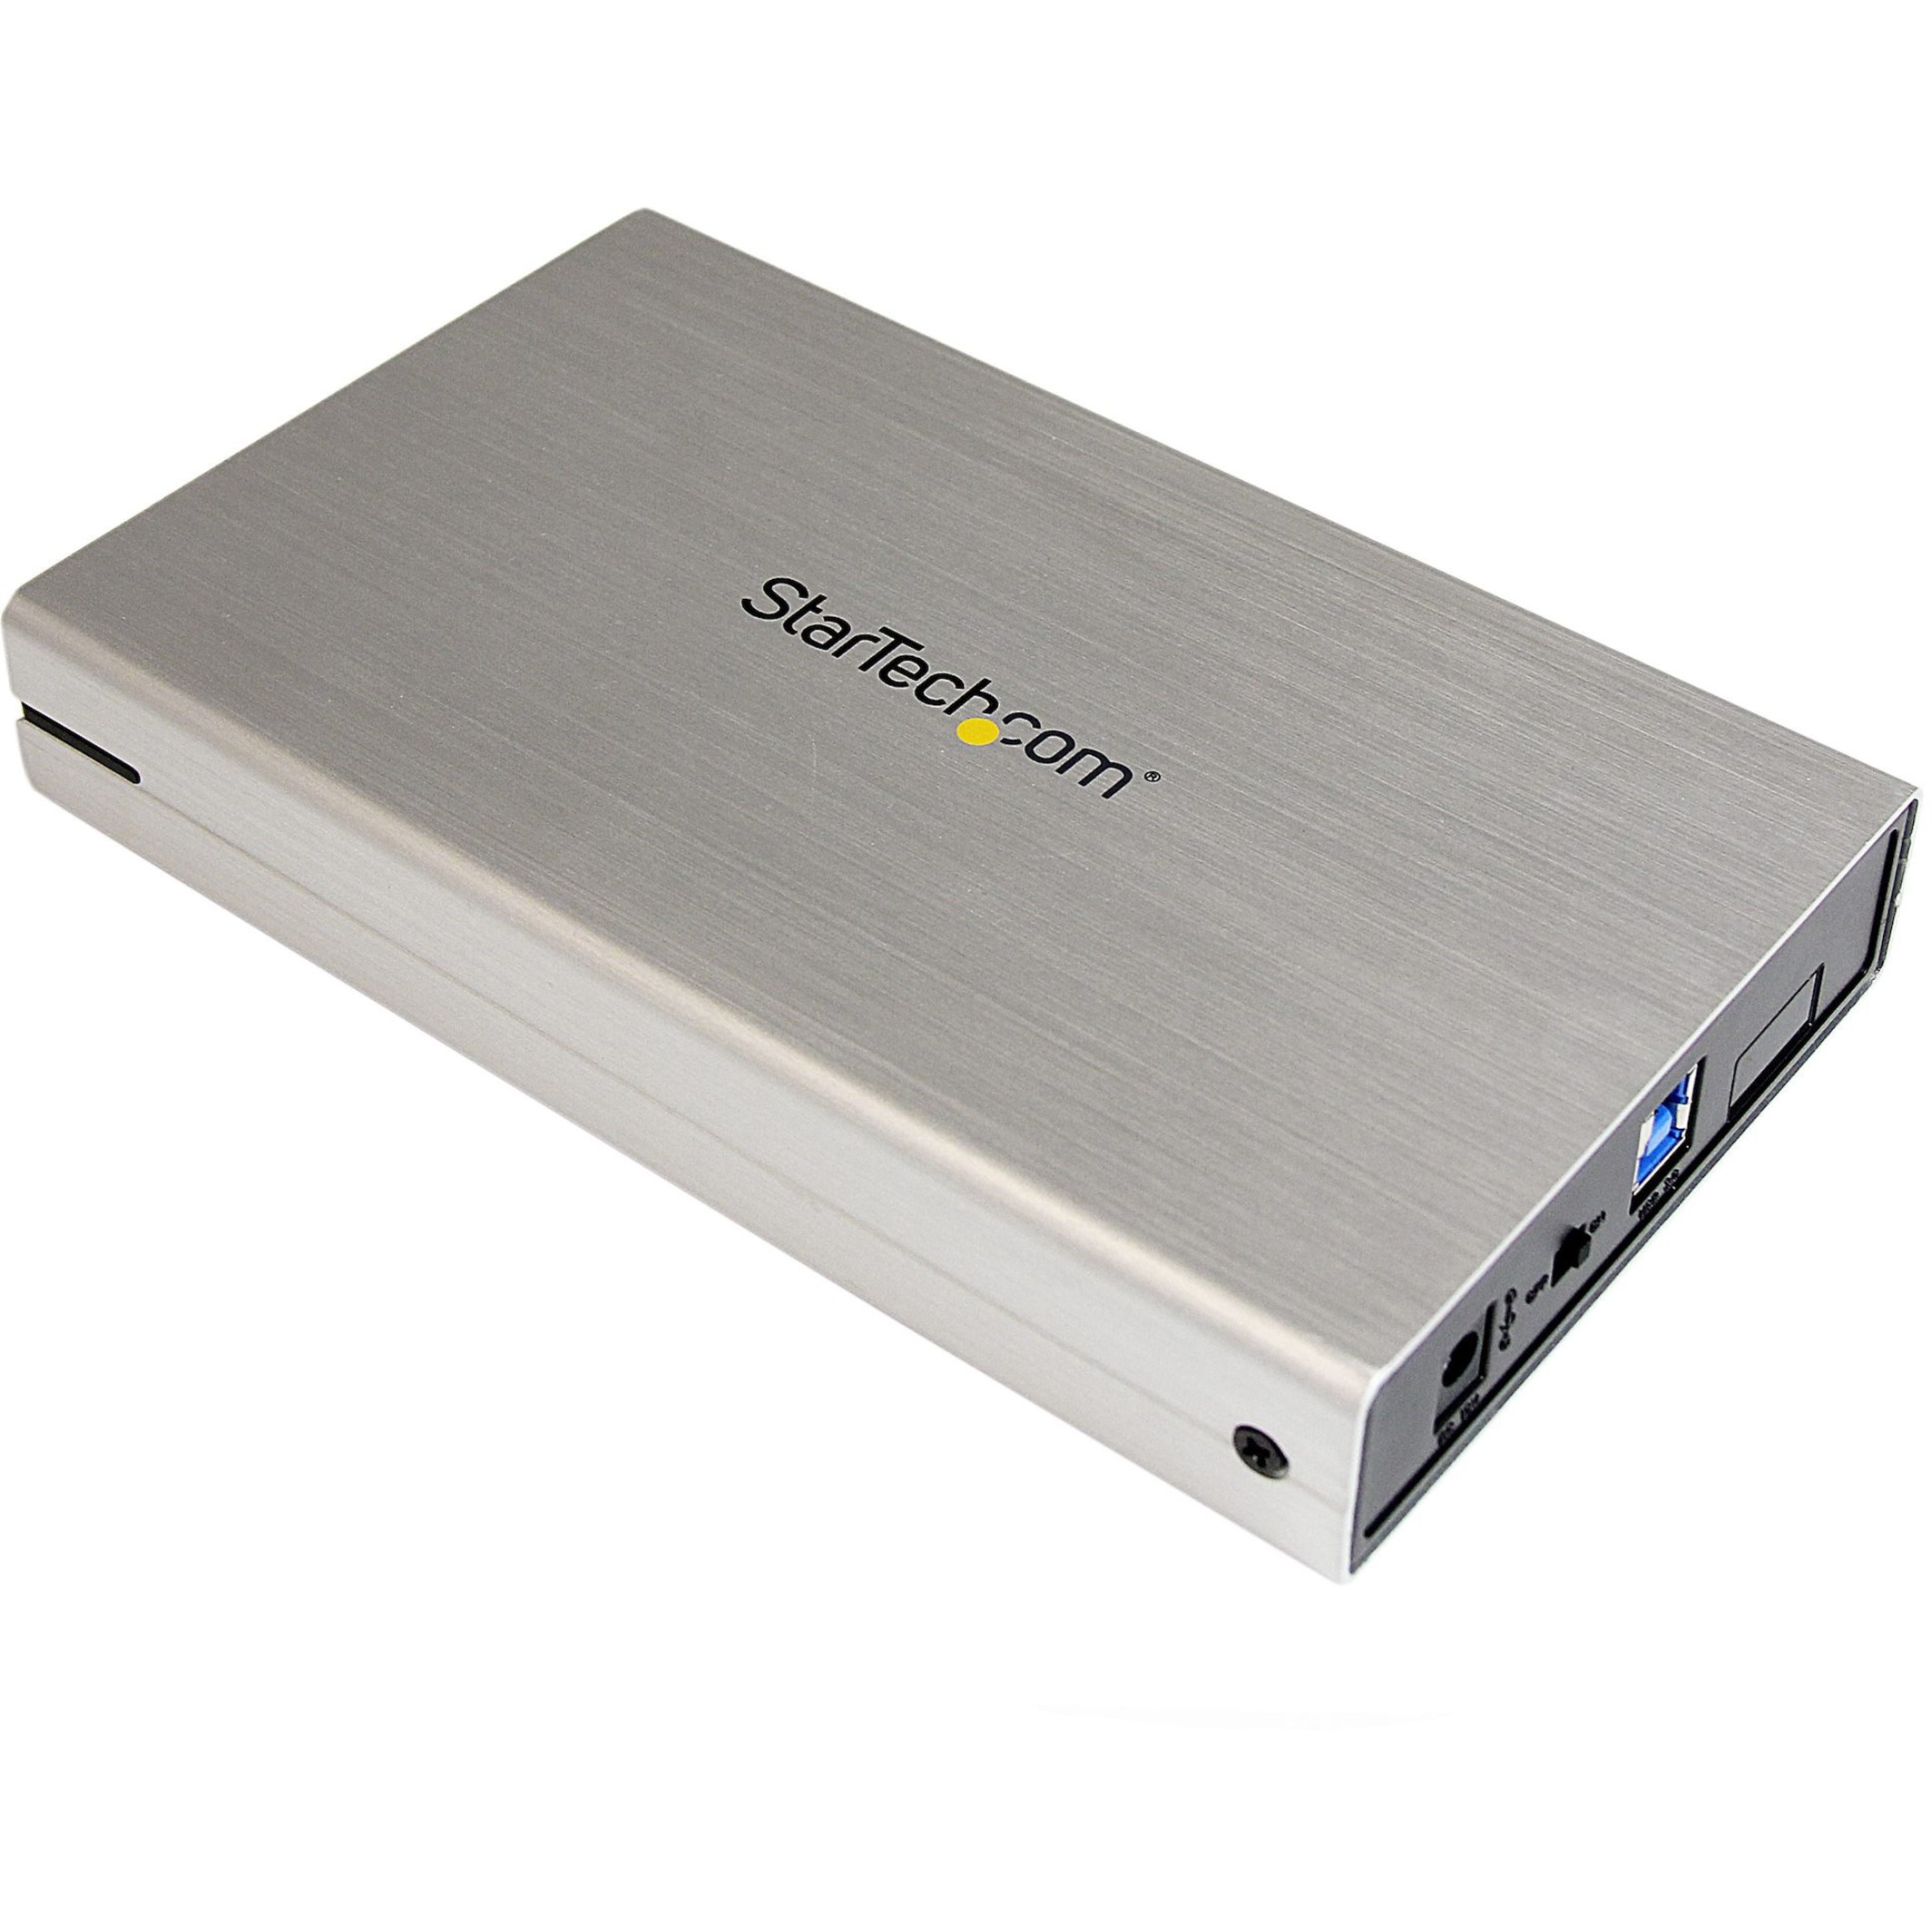 StarTech S3510SMU33 3.5in Silver Aluminum USB 3.0 External SATA III SSD / HDD Enclosure with UASP - Portable USB 3 3.5" SATA Hard Drive Enclosure - image 2 of 3